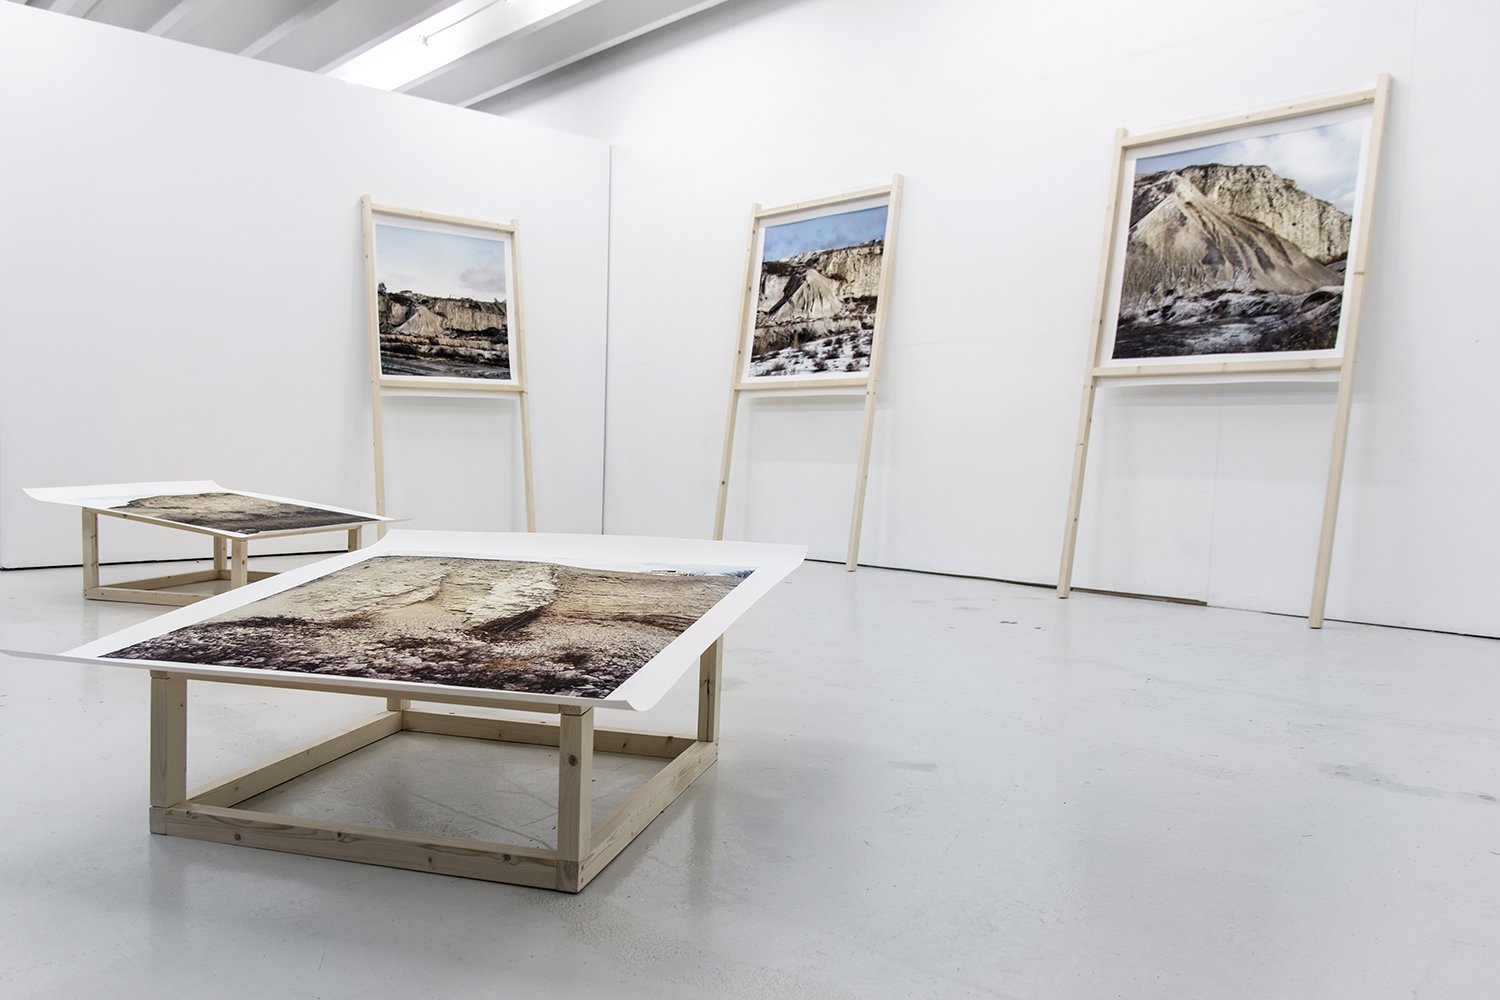   Limhamn  (2020), installation view. Medium format photography, giclée print on cotton paper, construction wood (pine),  110 x 120 x 44 cm. Documentation from Kunstgarasjen, Bergen. 